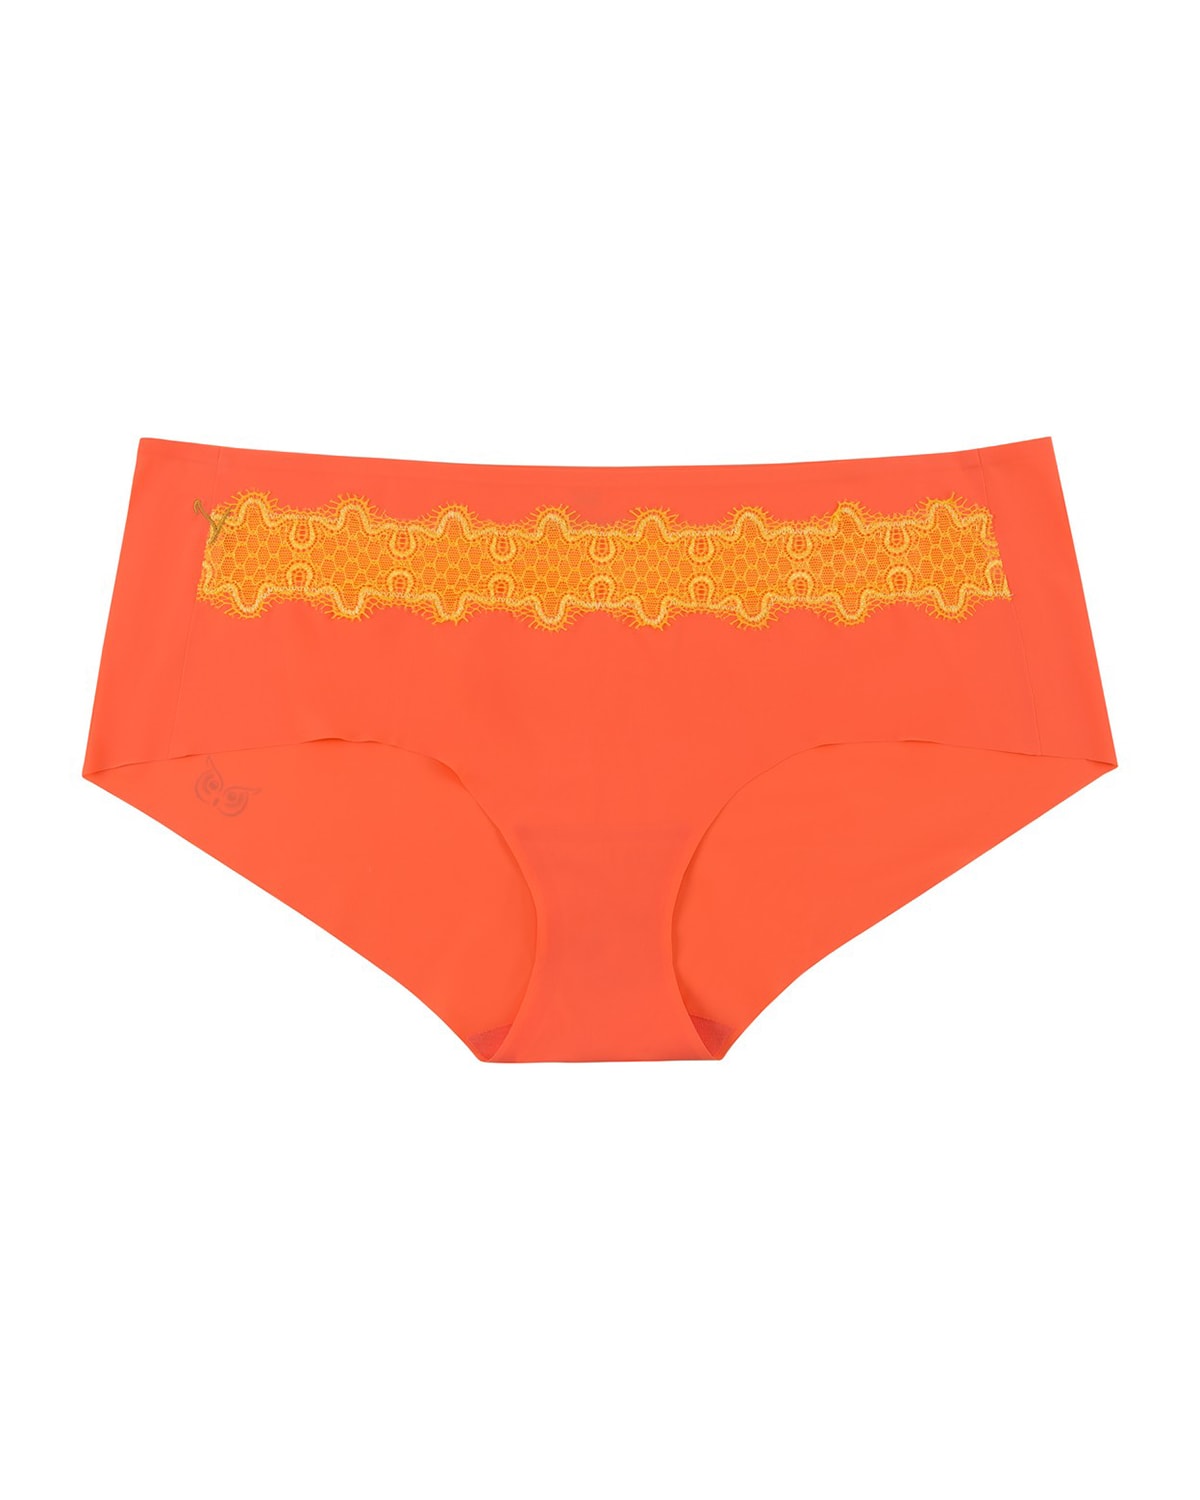 Uwila Warrior Happy Seam Brief Panties In Orange